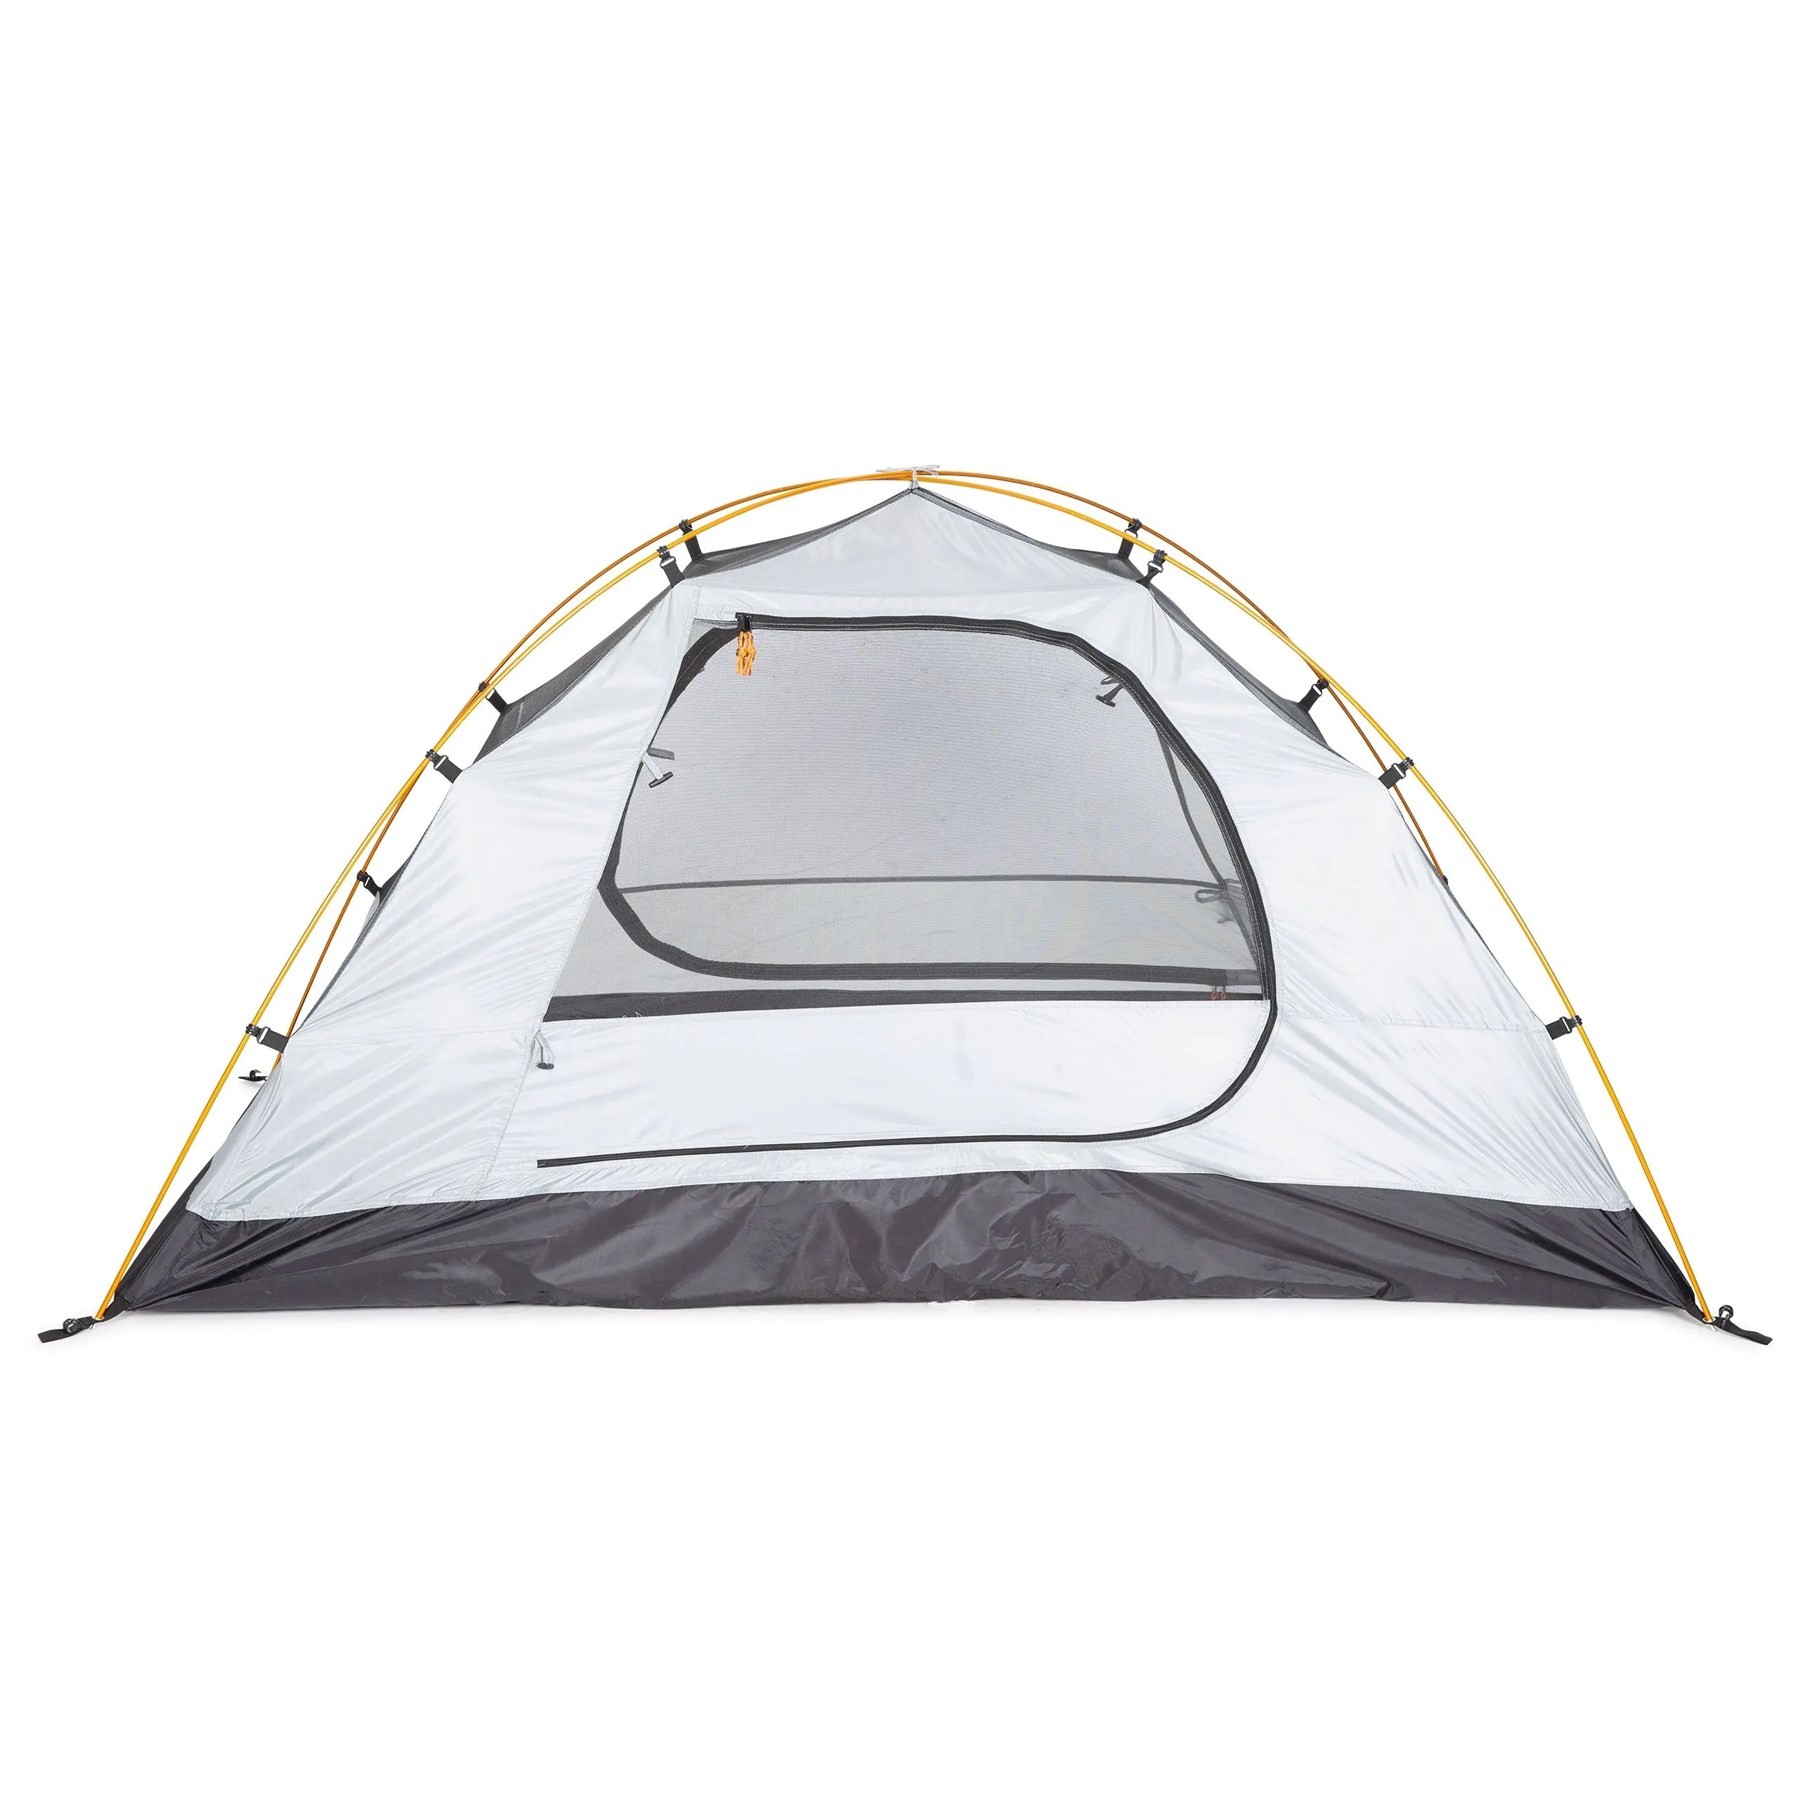 Trespass Unısex Battuta - Backpackıng Tent Olıve Çadır Uuactto10001-695